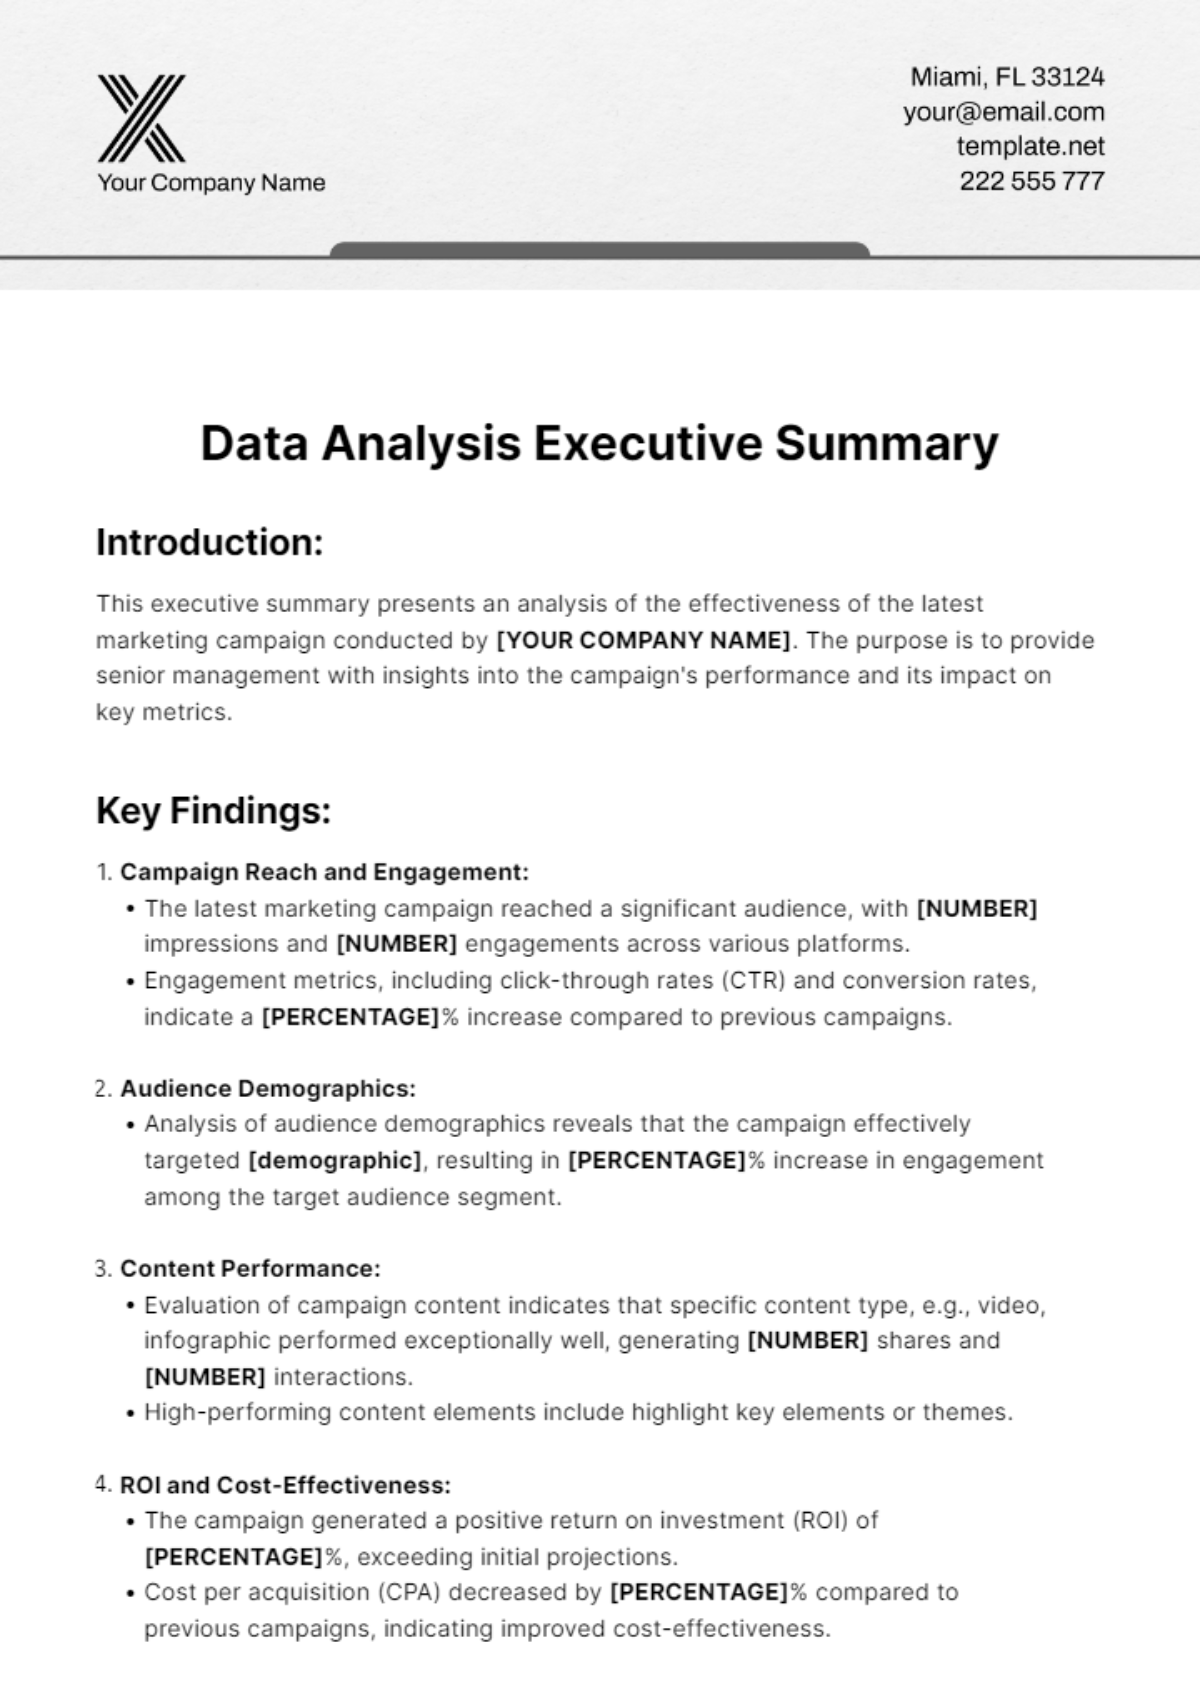 Data Analysis Executive Summary Template